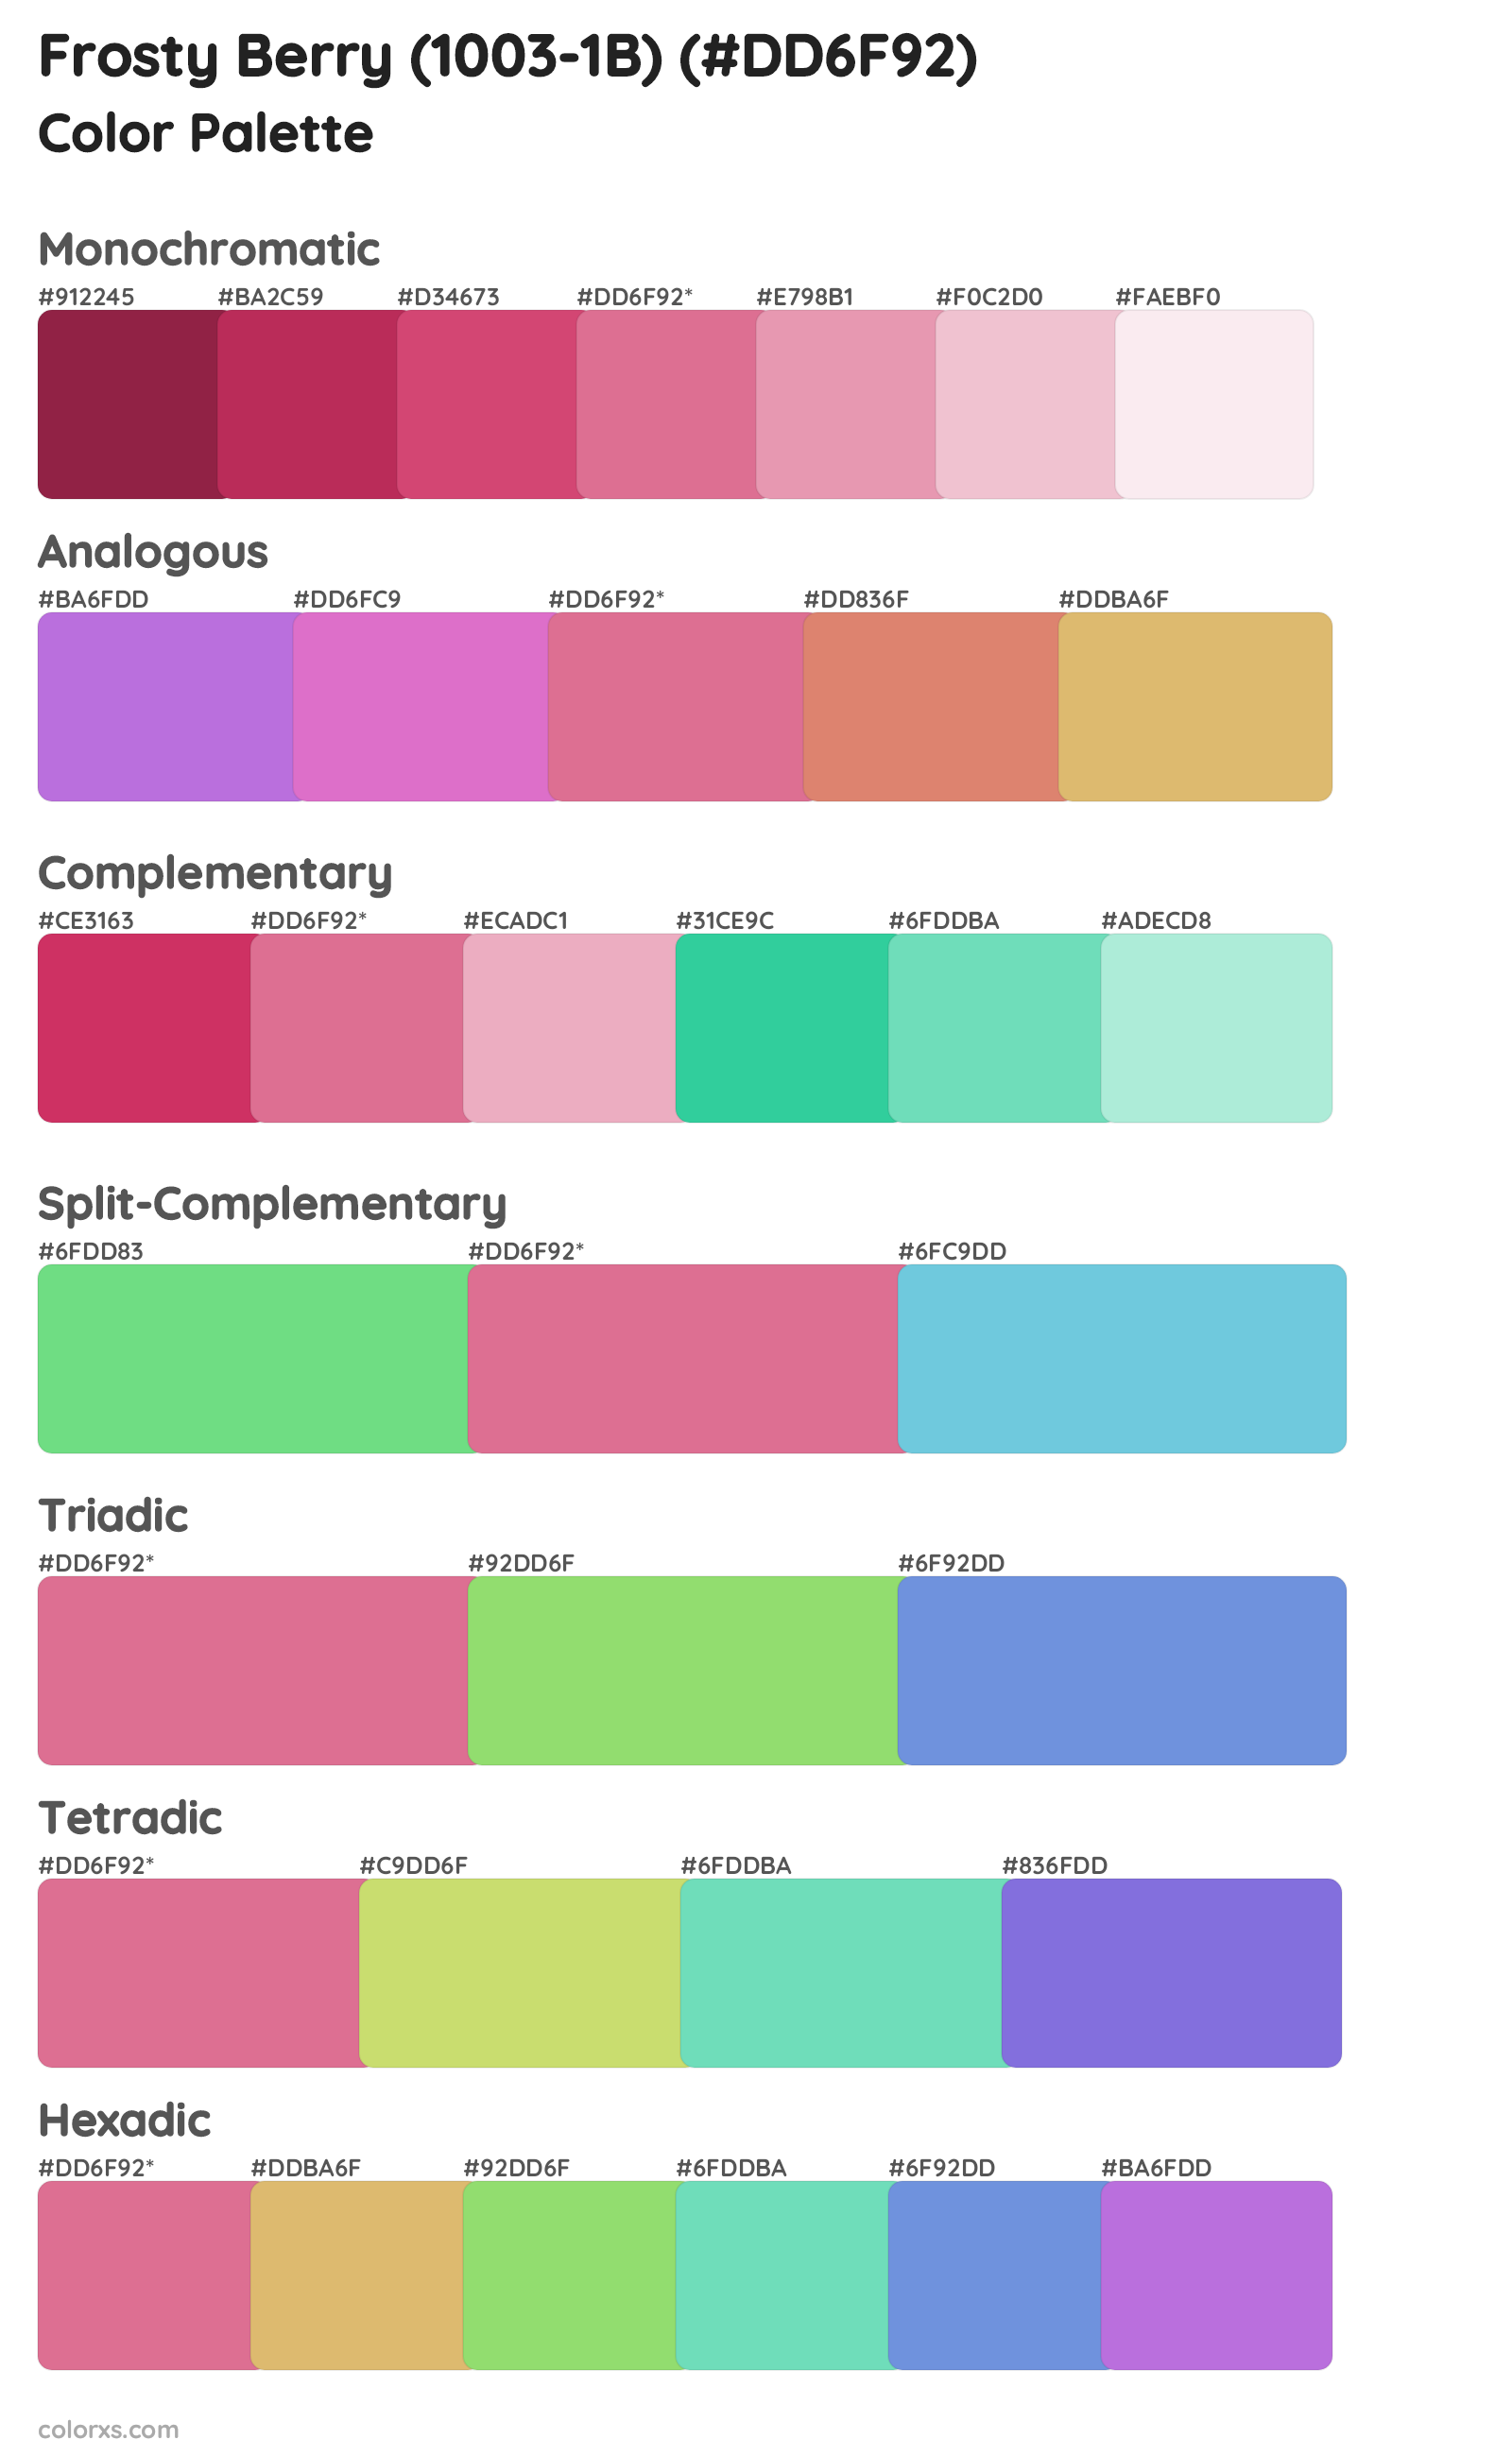 Frosty Berry (1003-1B) Color Scheme Palettes